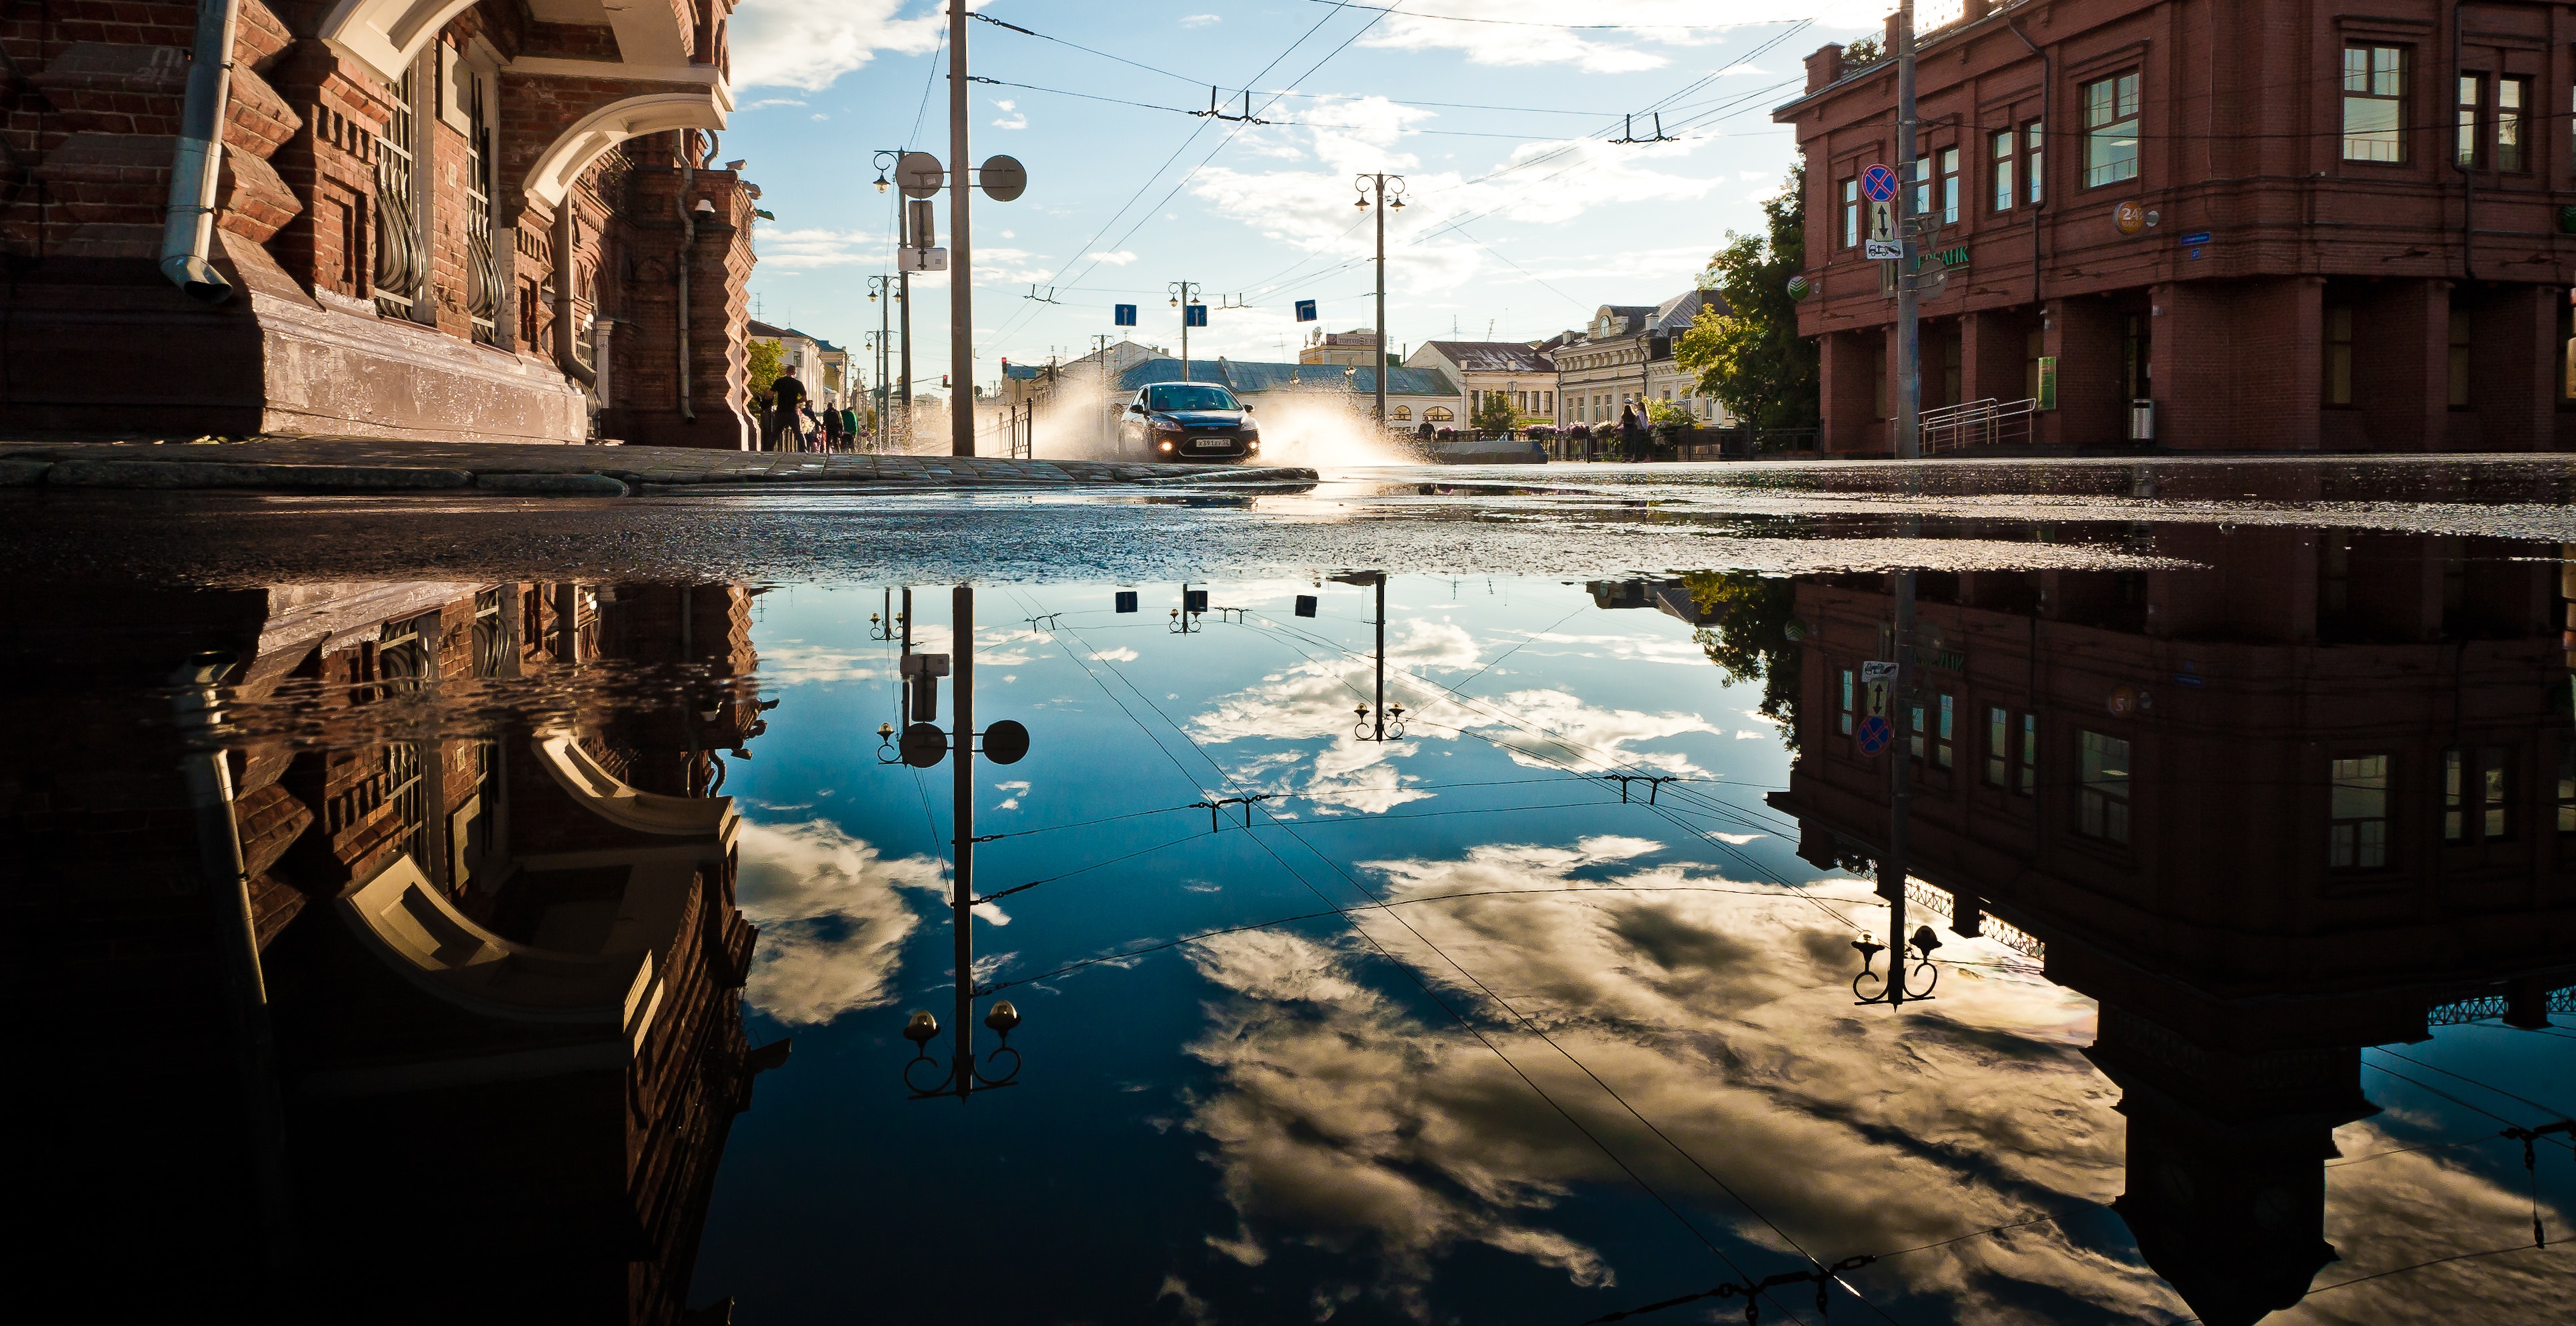 An urban flood